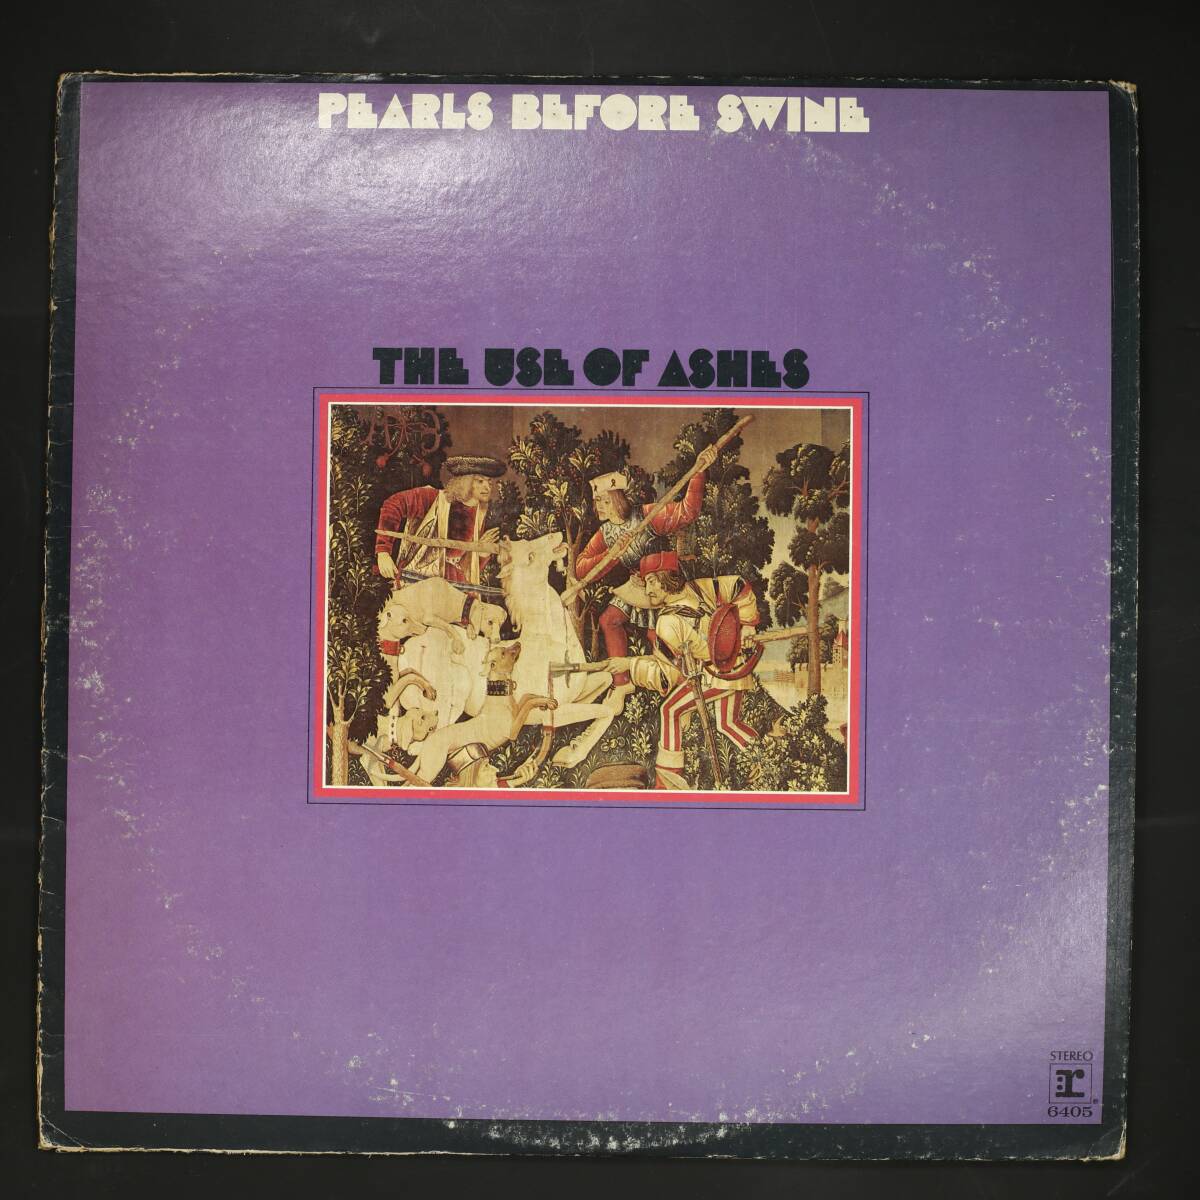 【US-ORIG.LP】Pearls Before Swine/The Use Of Ashes(並品,US PSYCH～ACID FOLK,1970,Tom Rapp)_画像1